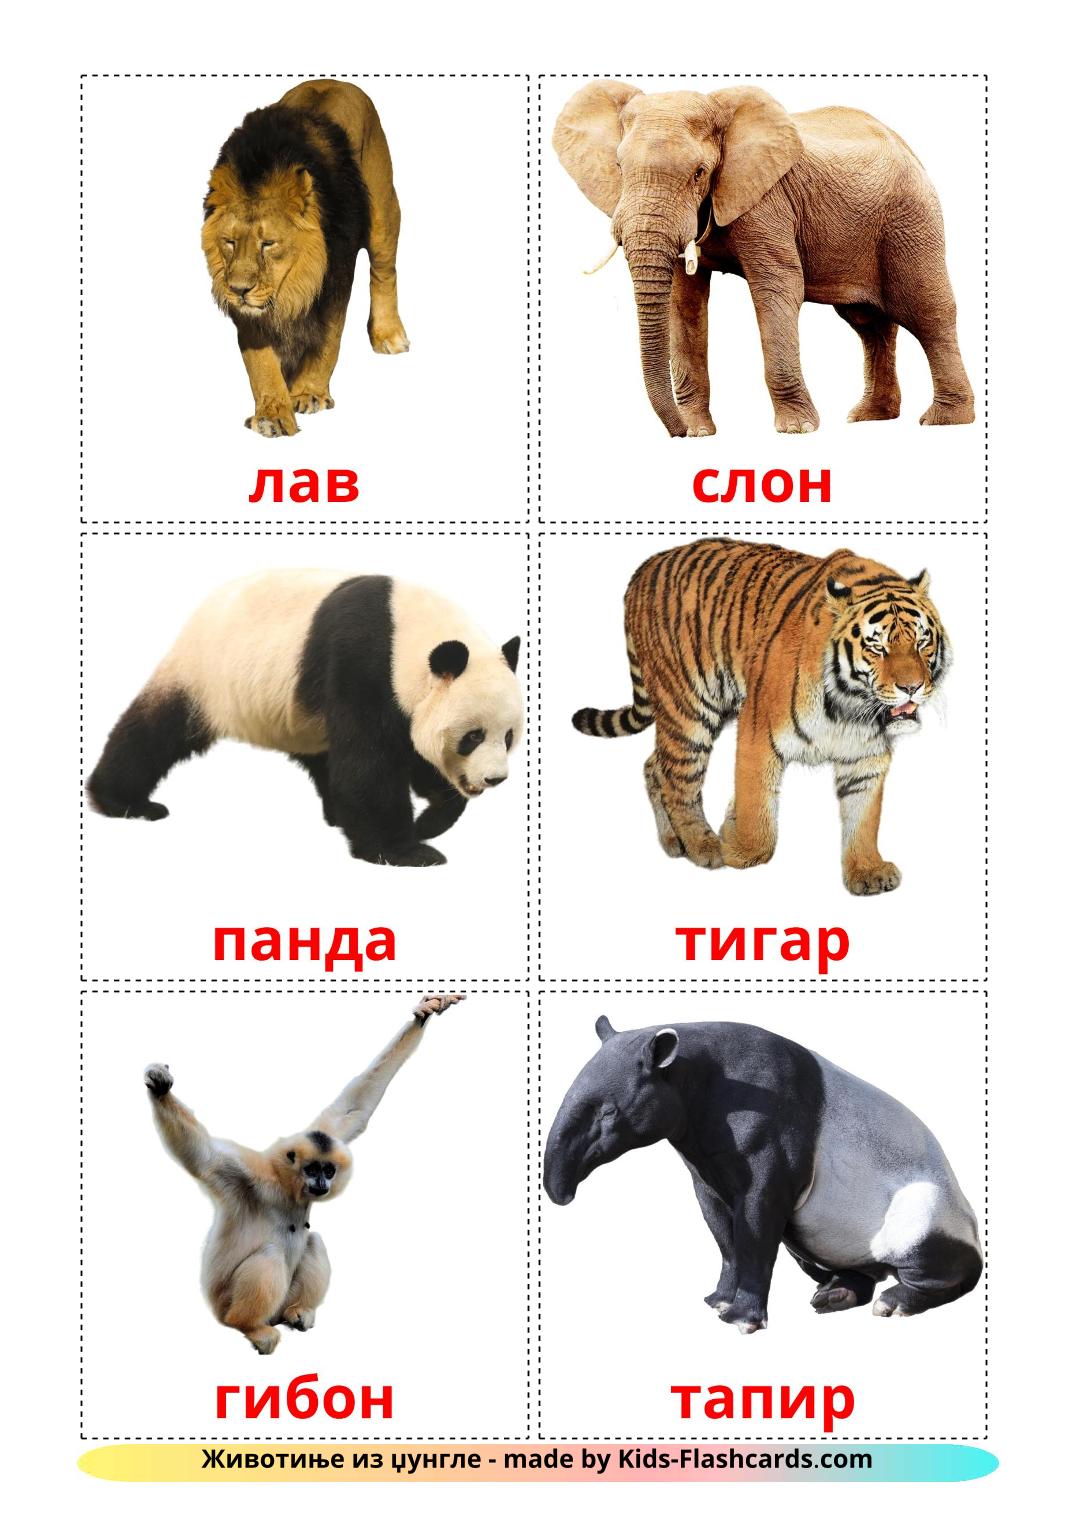 Jungle animals - 21 Free Printable serbian(cyrillic) Flashcards 